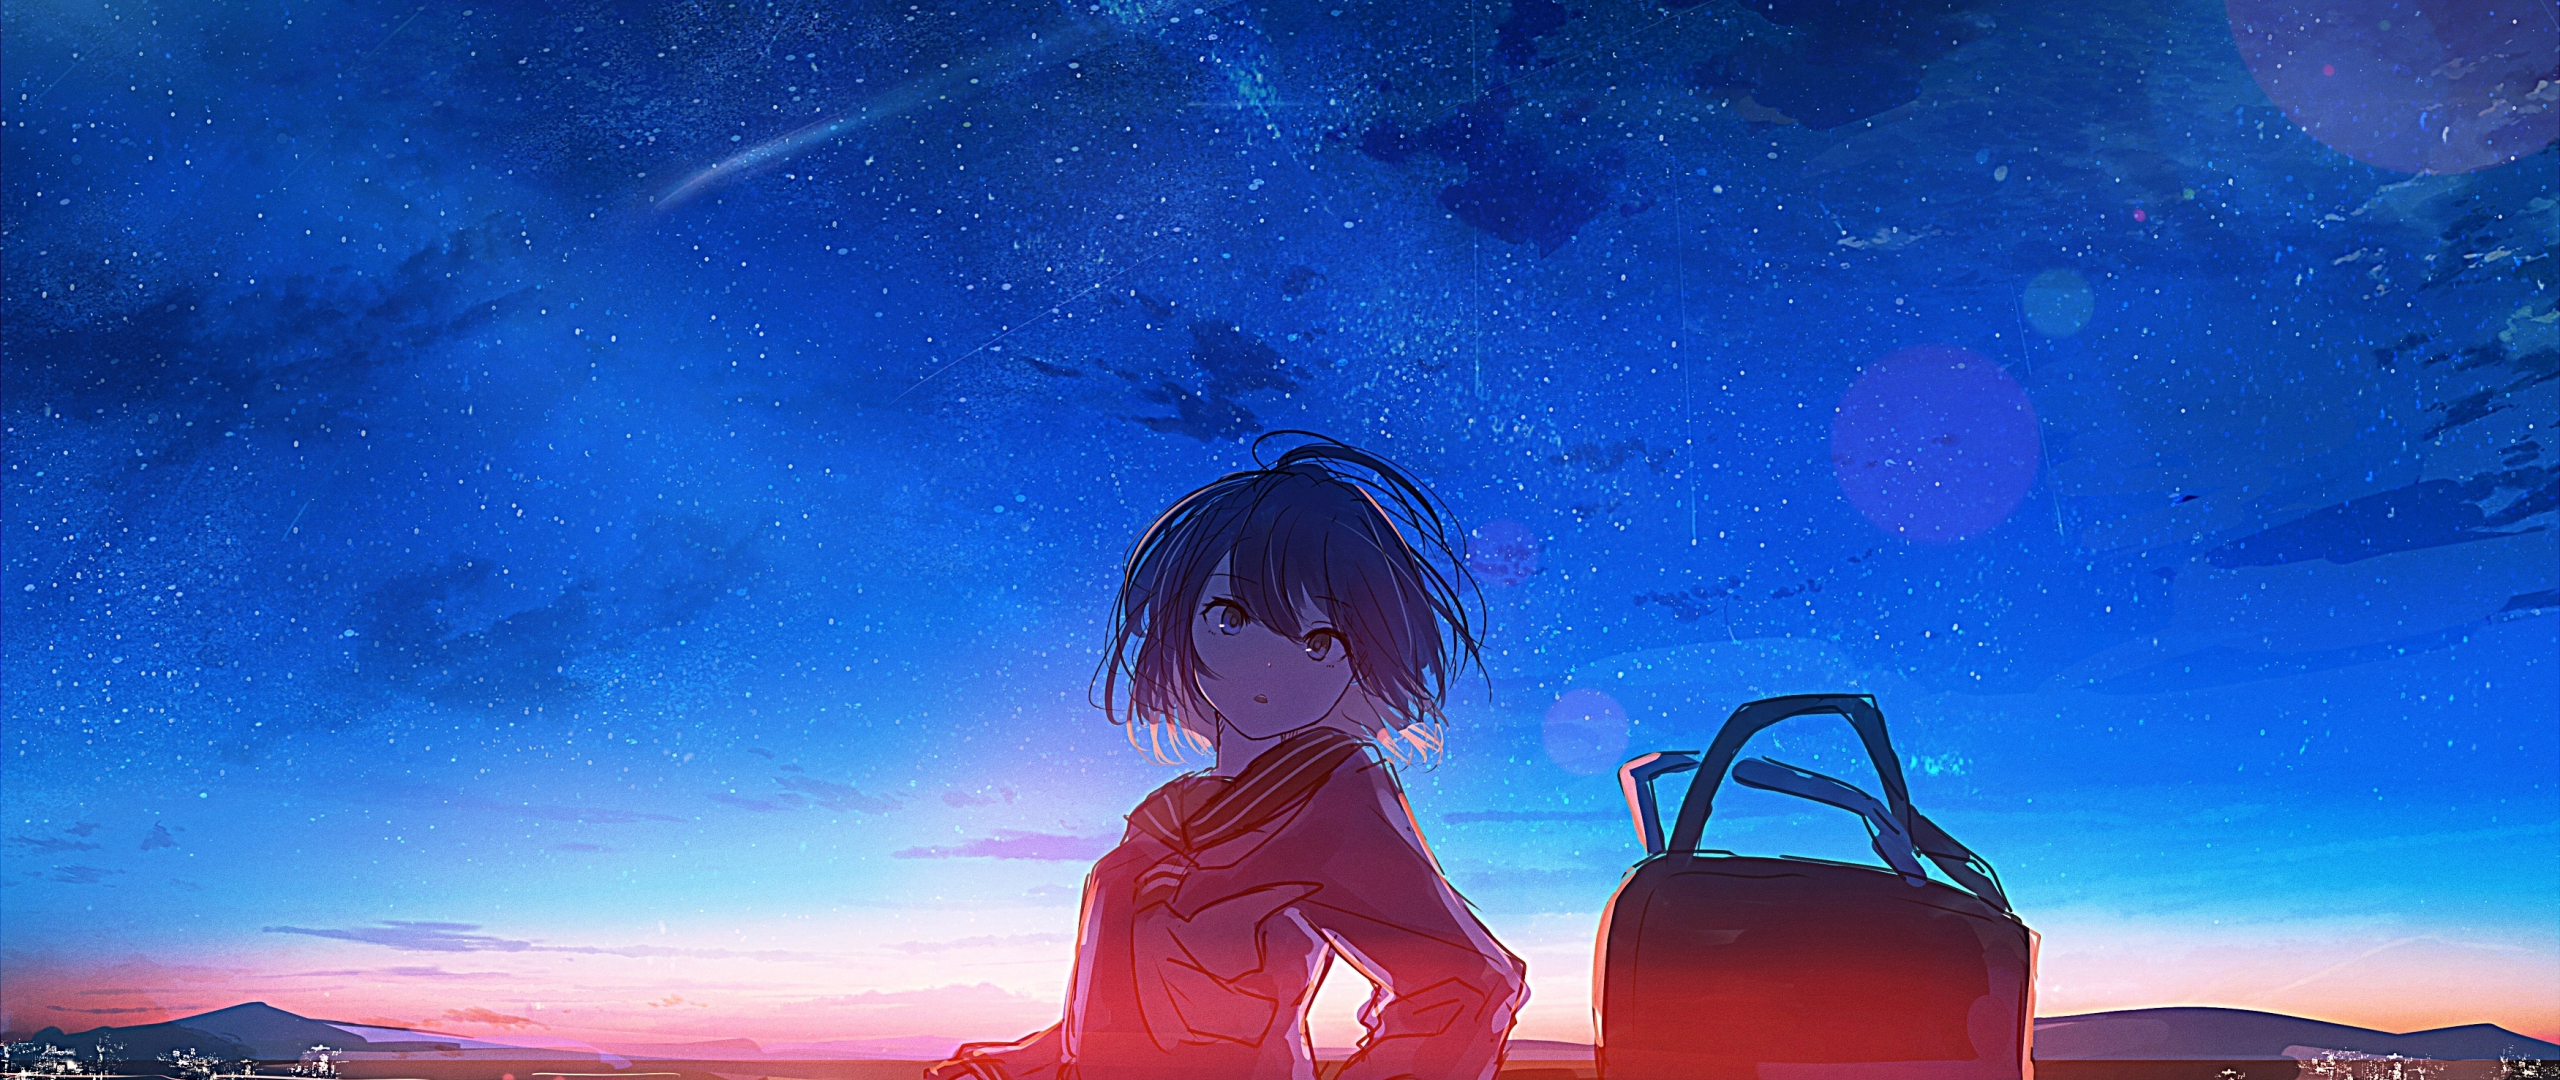 Download Schoolgirl Anime Sunset Outdoor 2560x1080 Wallpaper Dual Wide 2560x1080 Hd Image Background